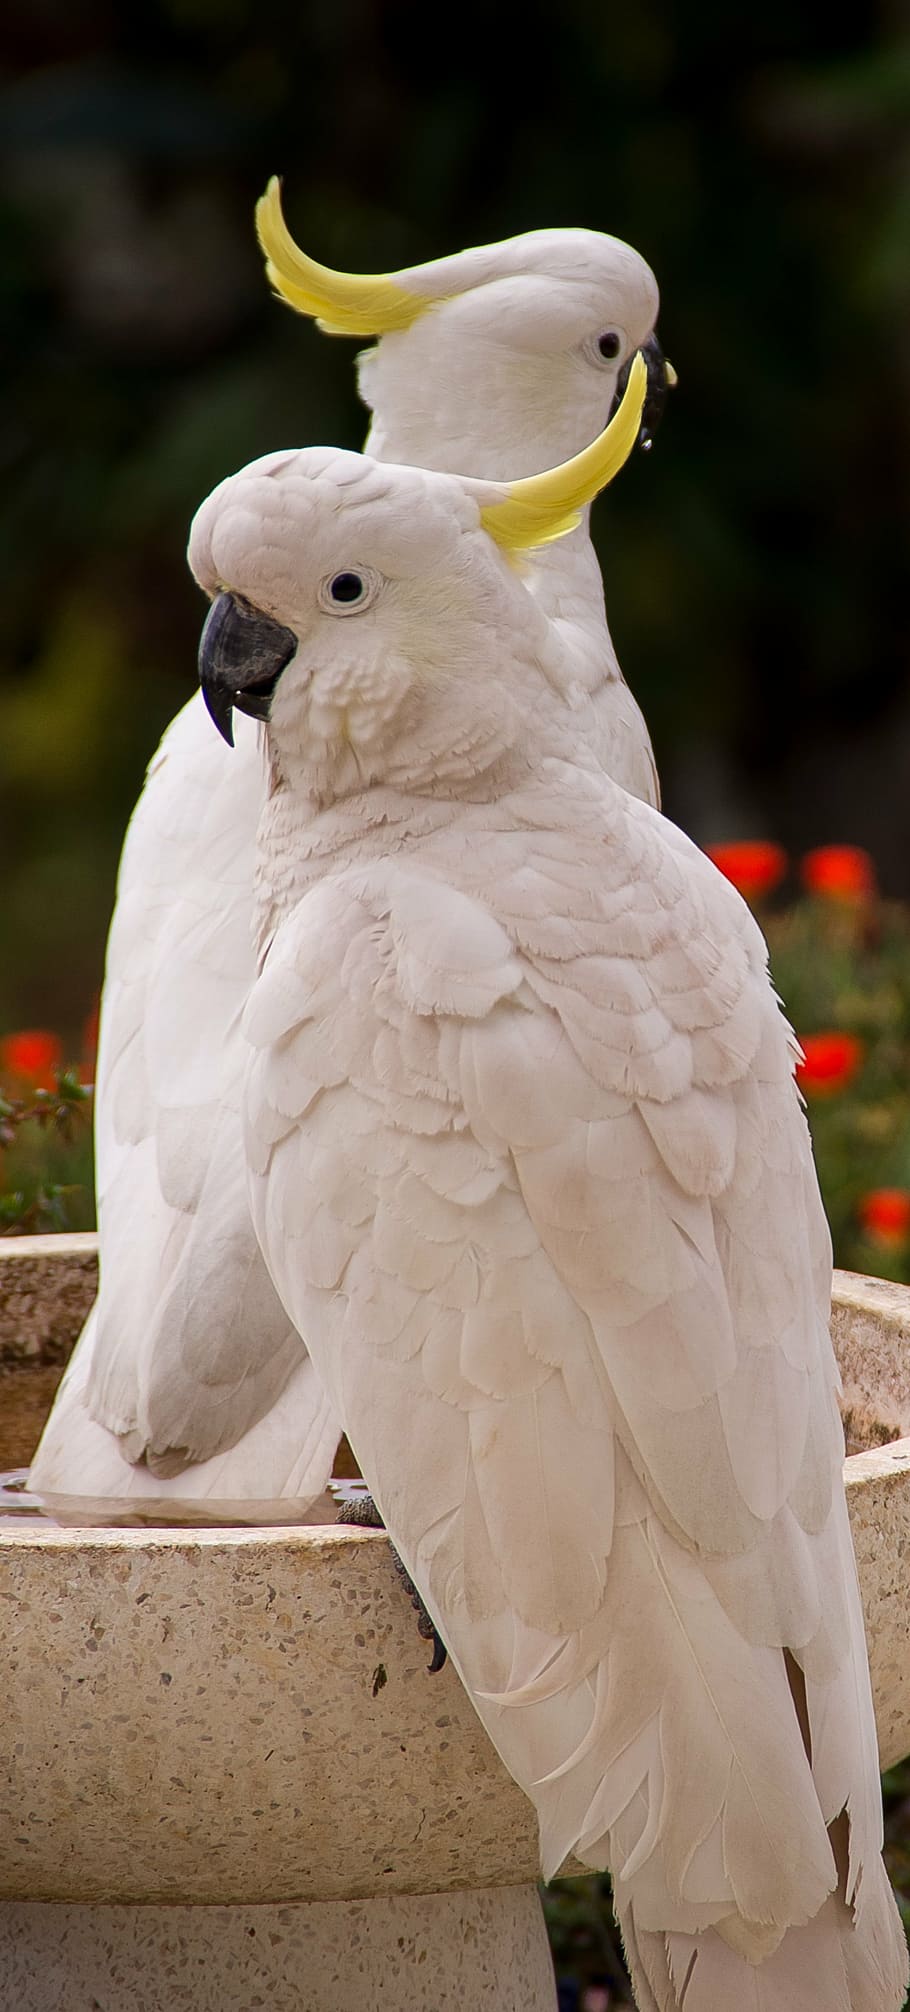 two, white, cockatoos, sitting, bird bath, daytime, sulphur crested cockatoo, parrot, cacatua galerita, bird